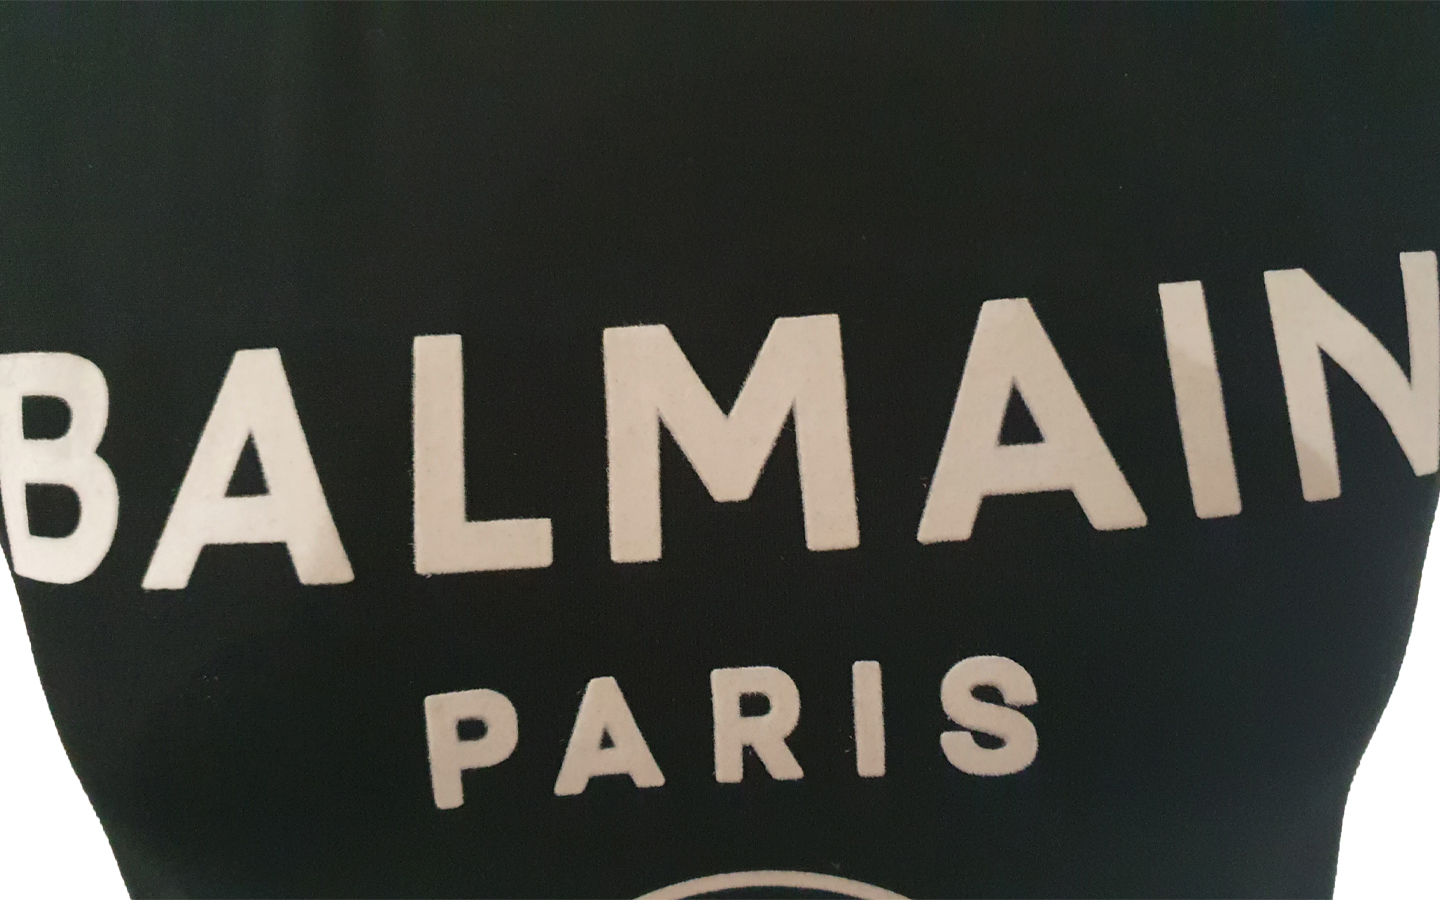 Balmain Paris Sleeveless T-Shirt In Black And White - Rogue Menswear